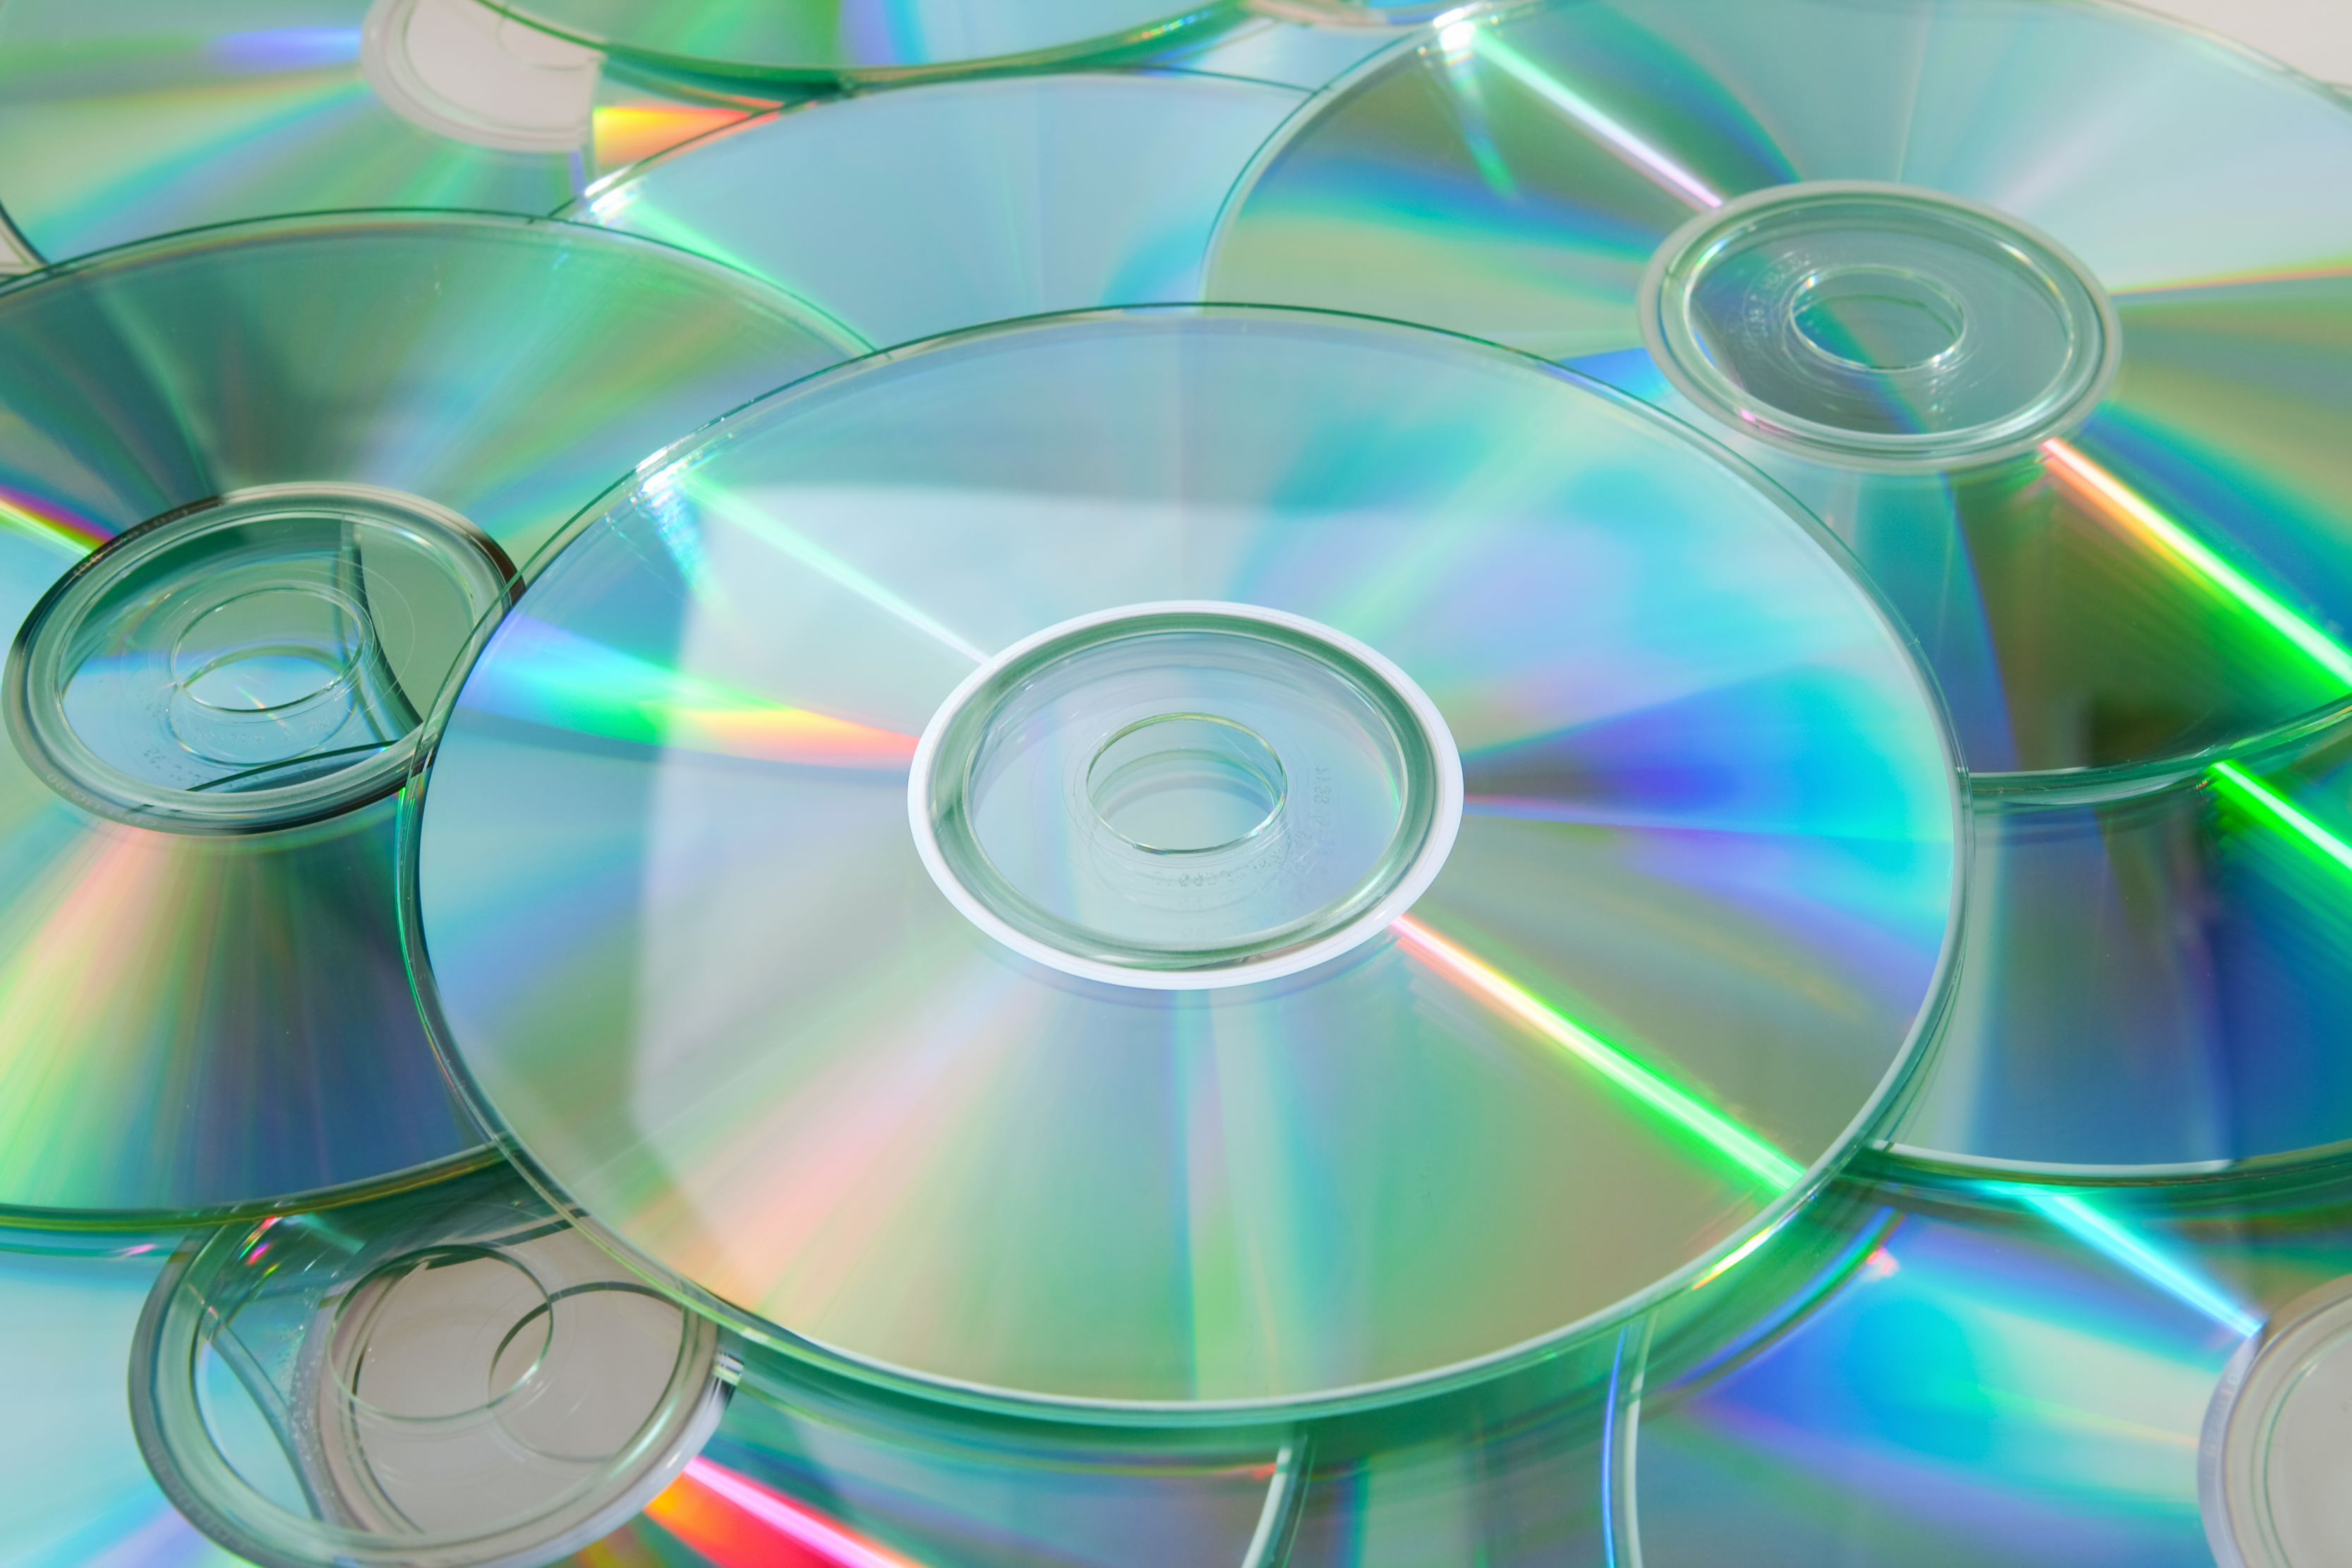 CD - Compact Disk (компакт диск)